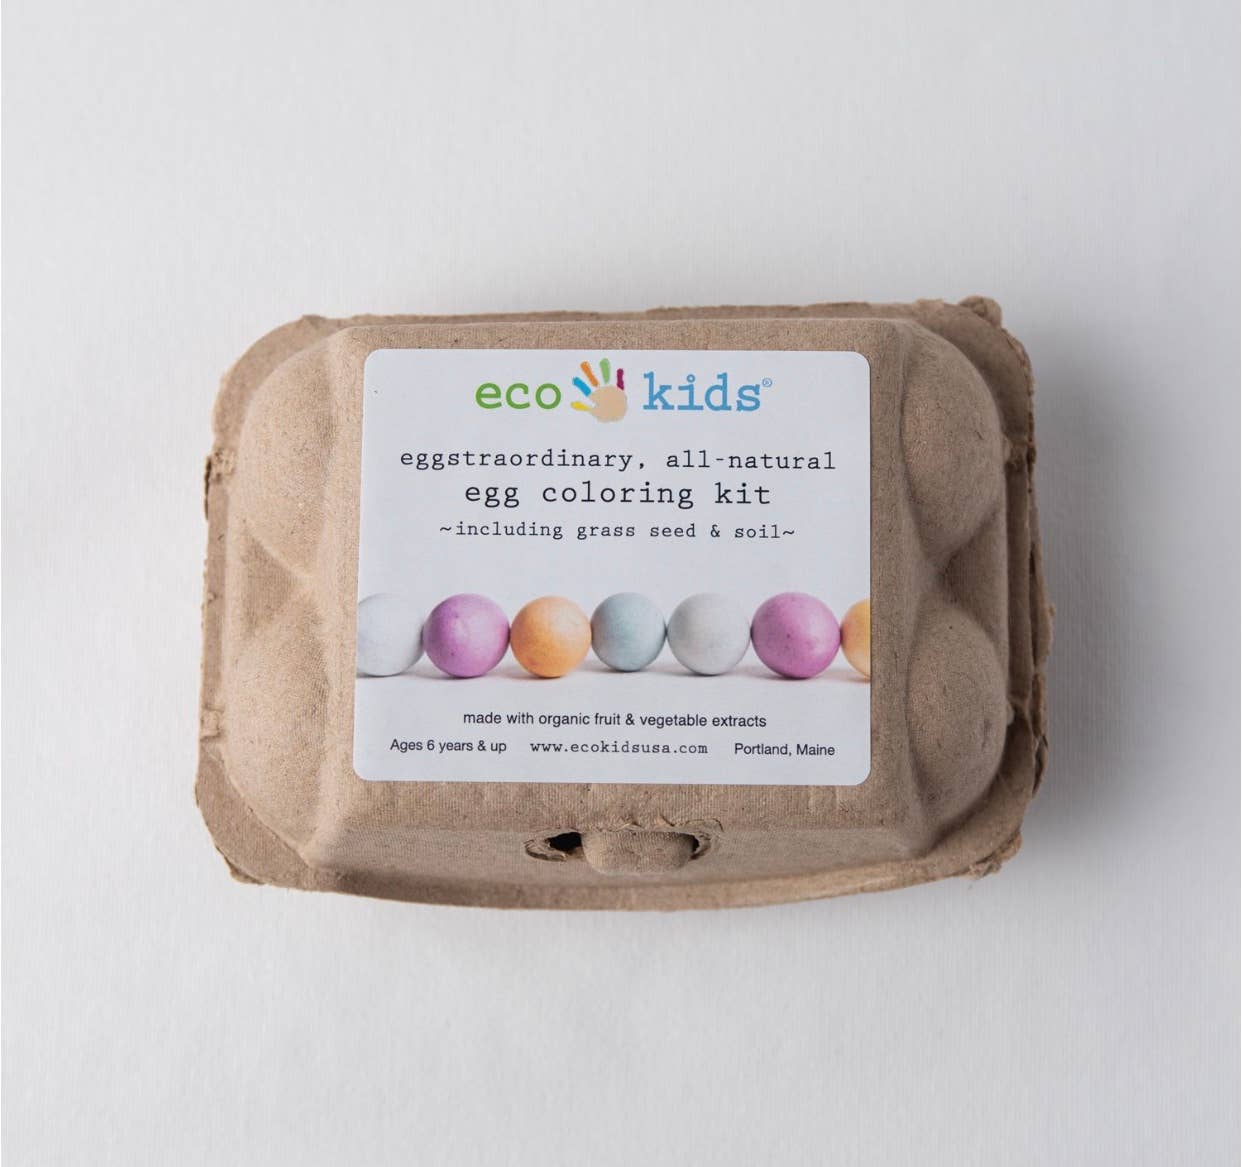 eco-kids - egg coloring kit